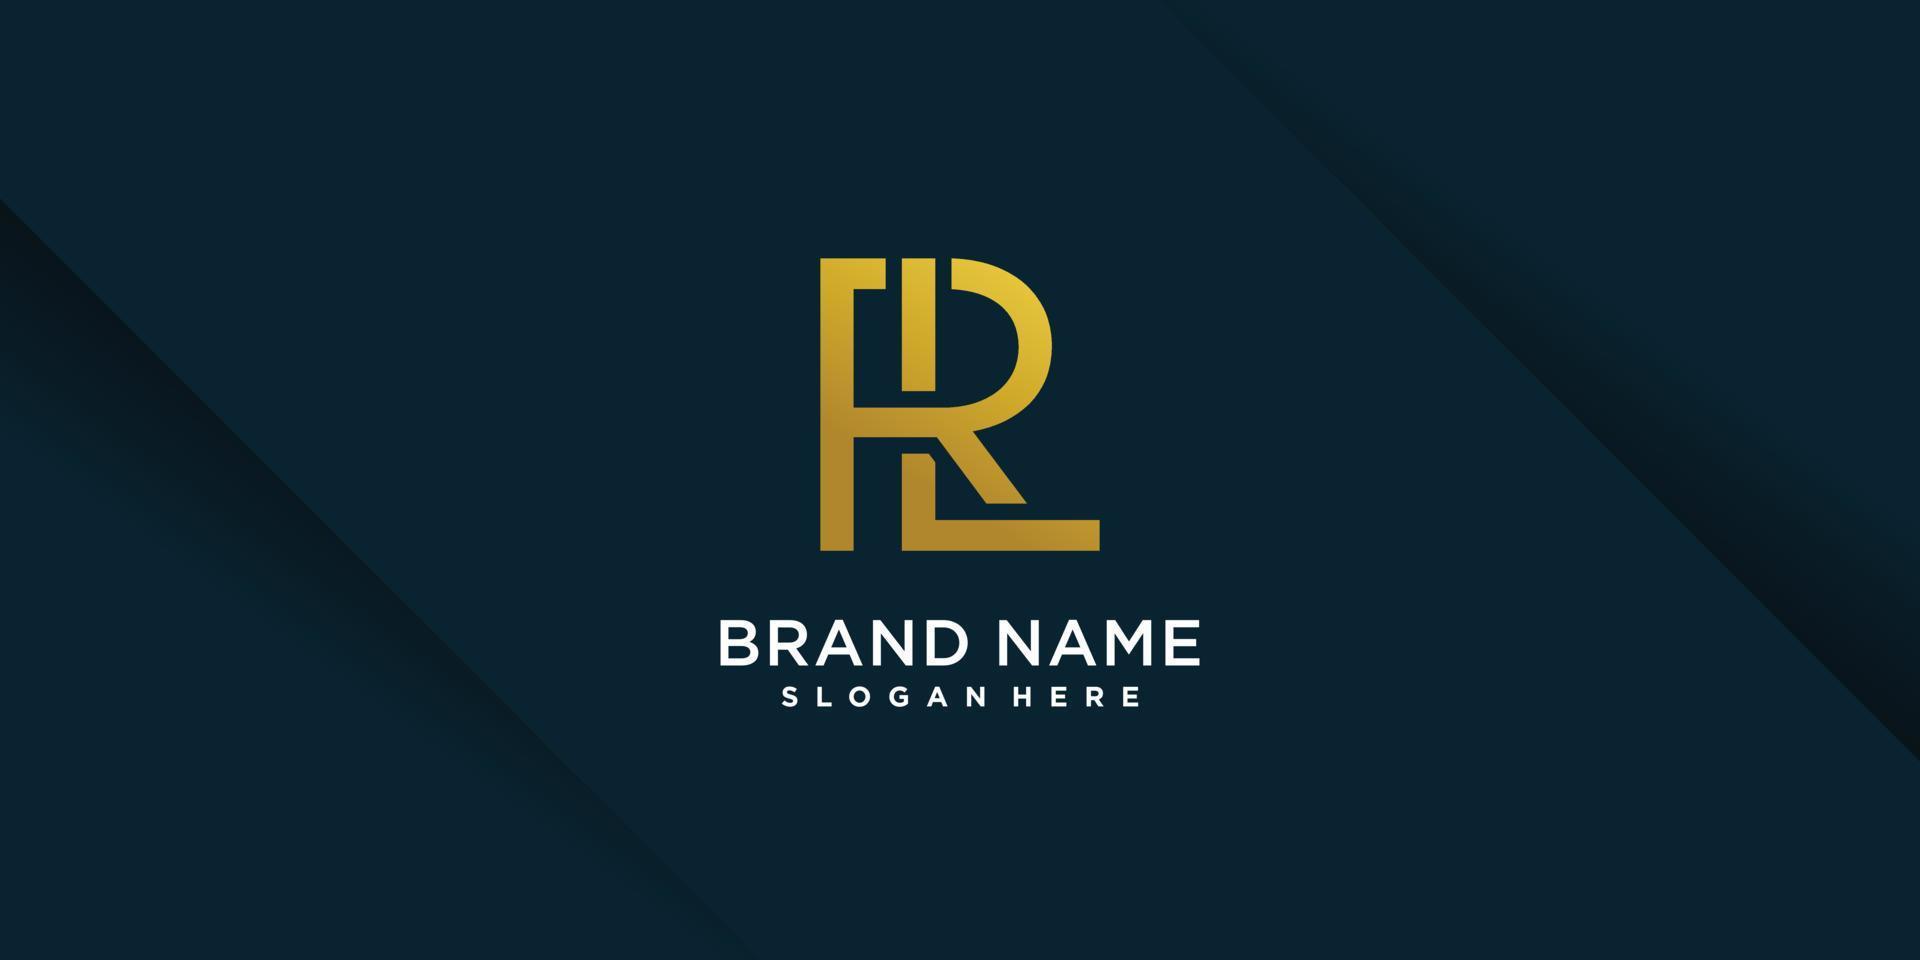 R logo with creative element style Premium Vector part 8